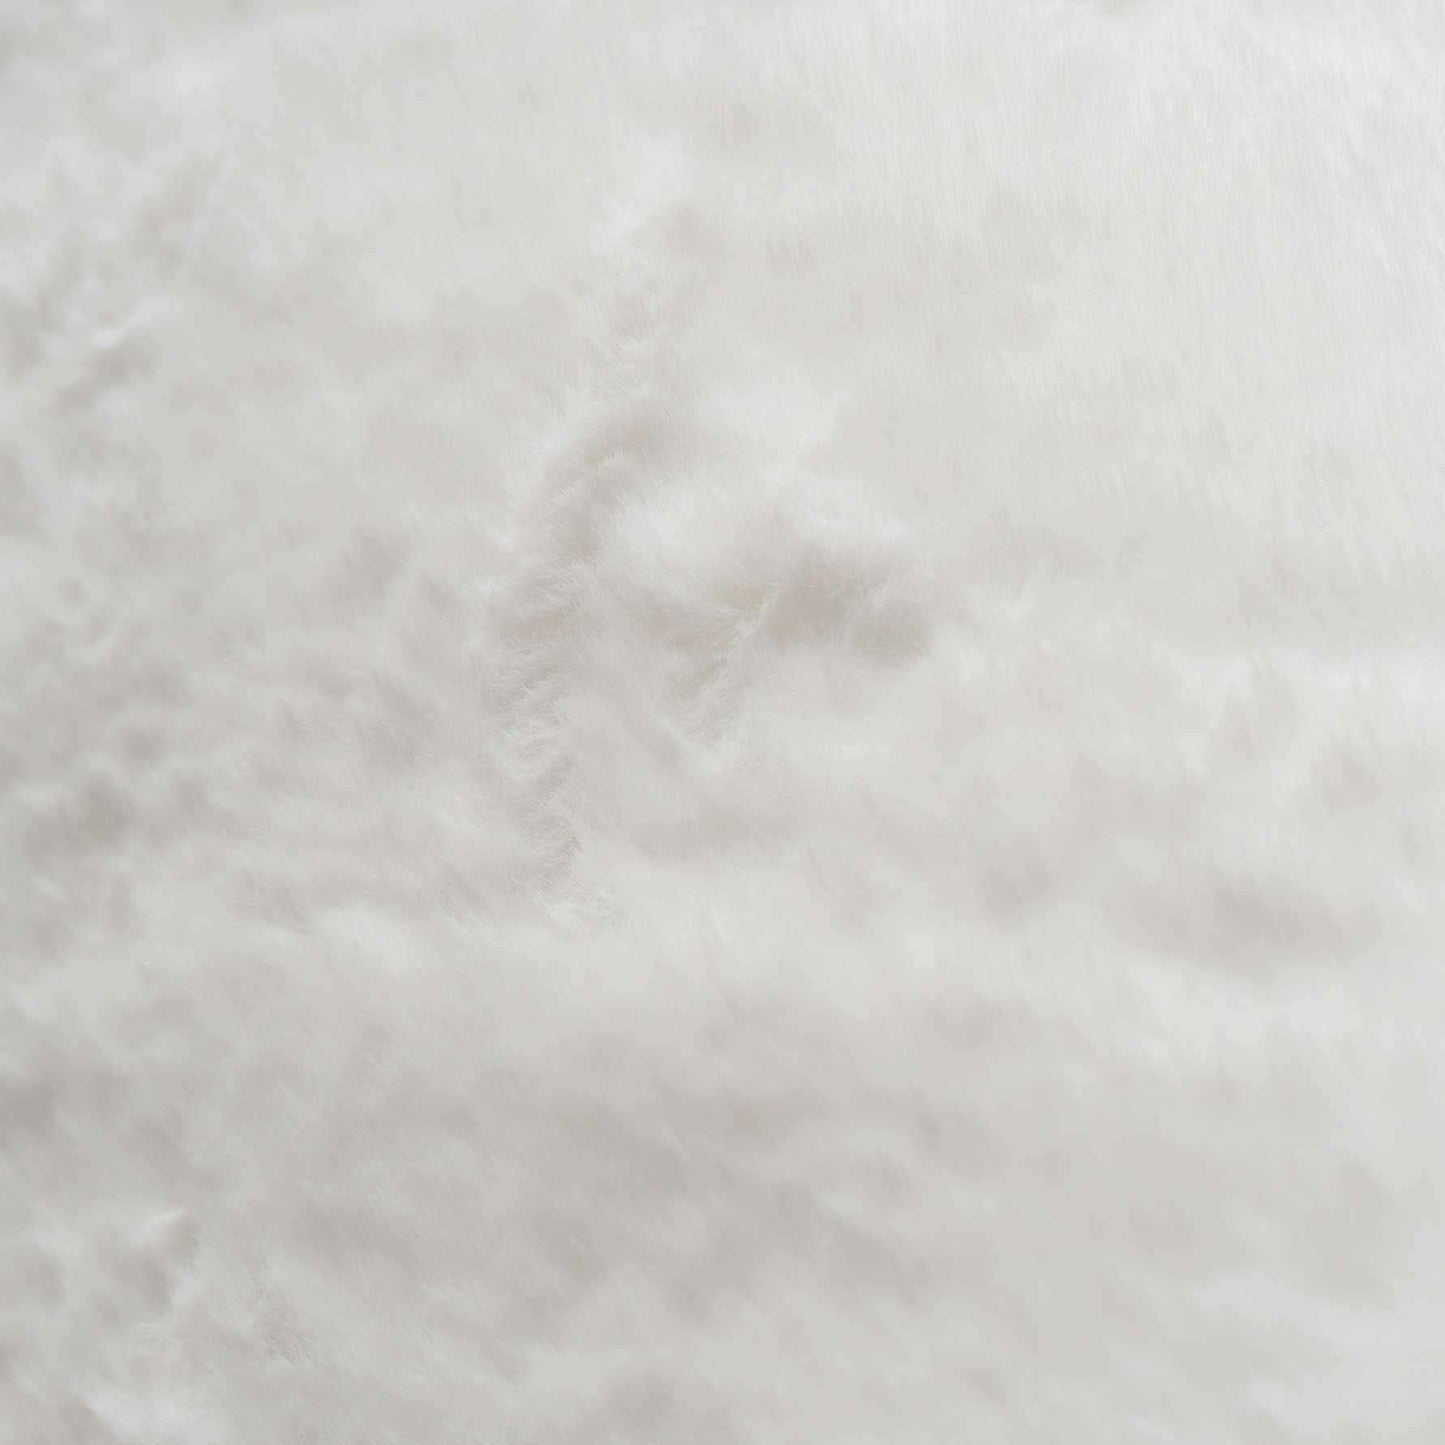 Super Soft White Faux Fur Runner Rug